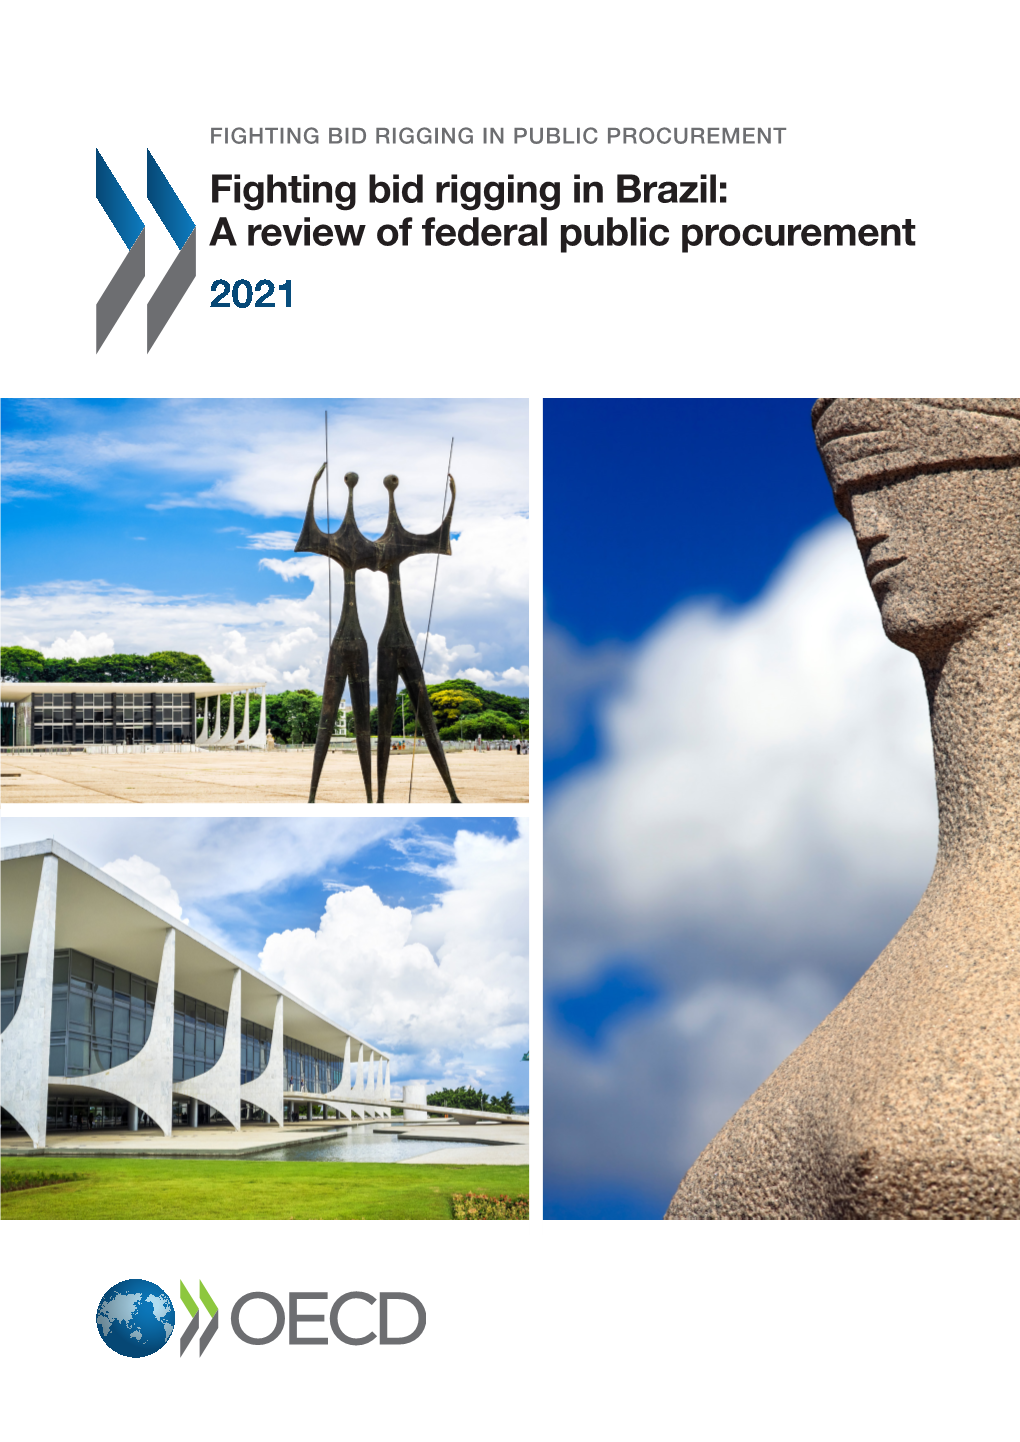 Fighting Bid Rigging in Brazil: a Review of Federal Public Procurement 2021